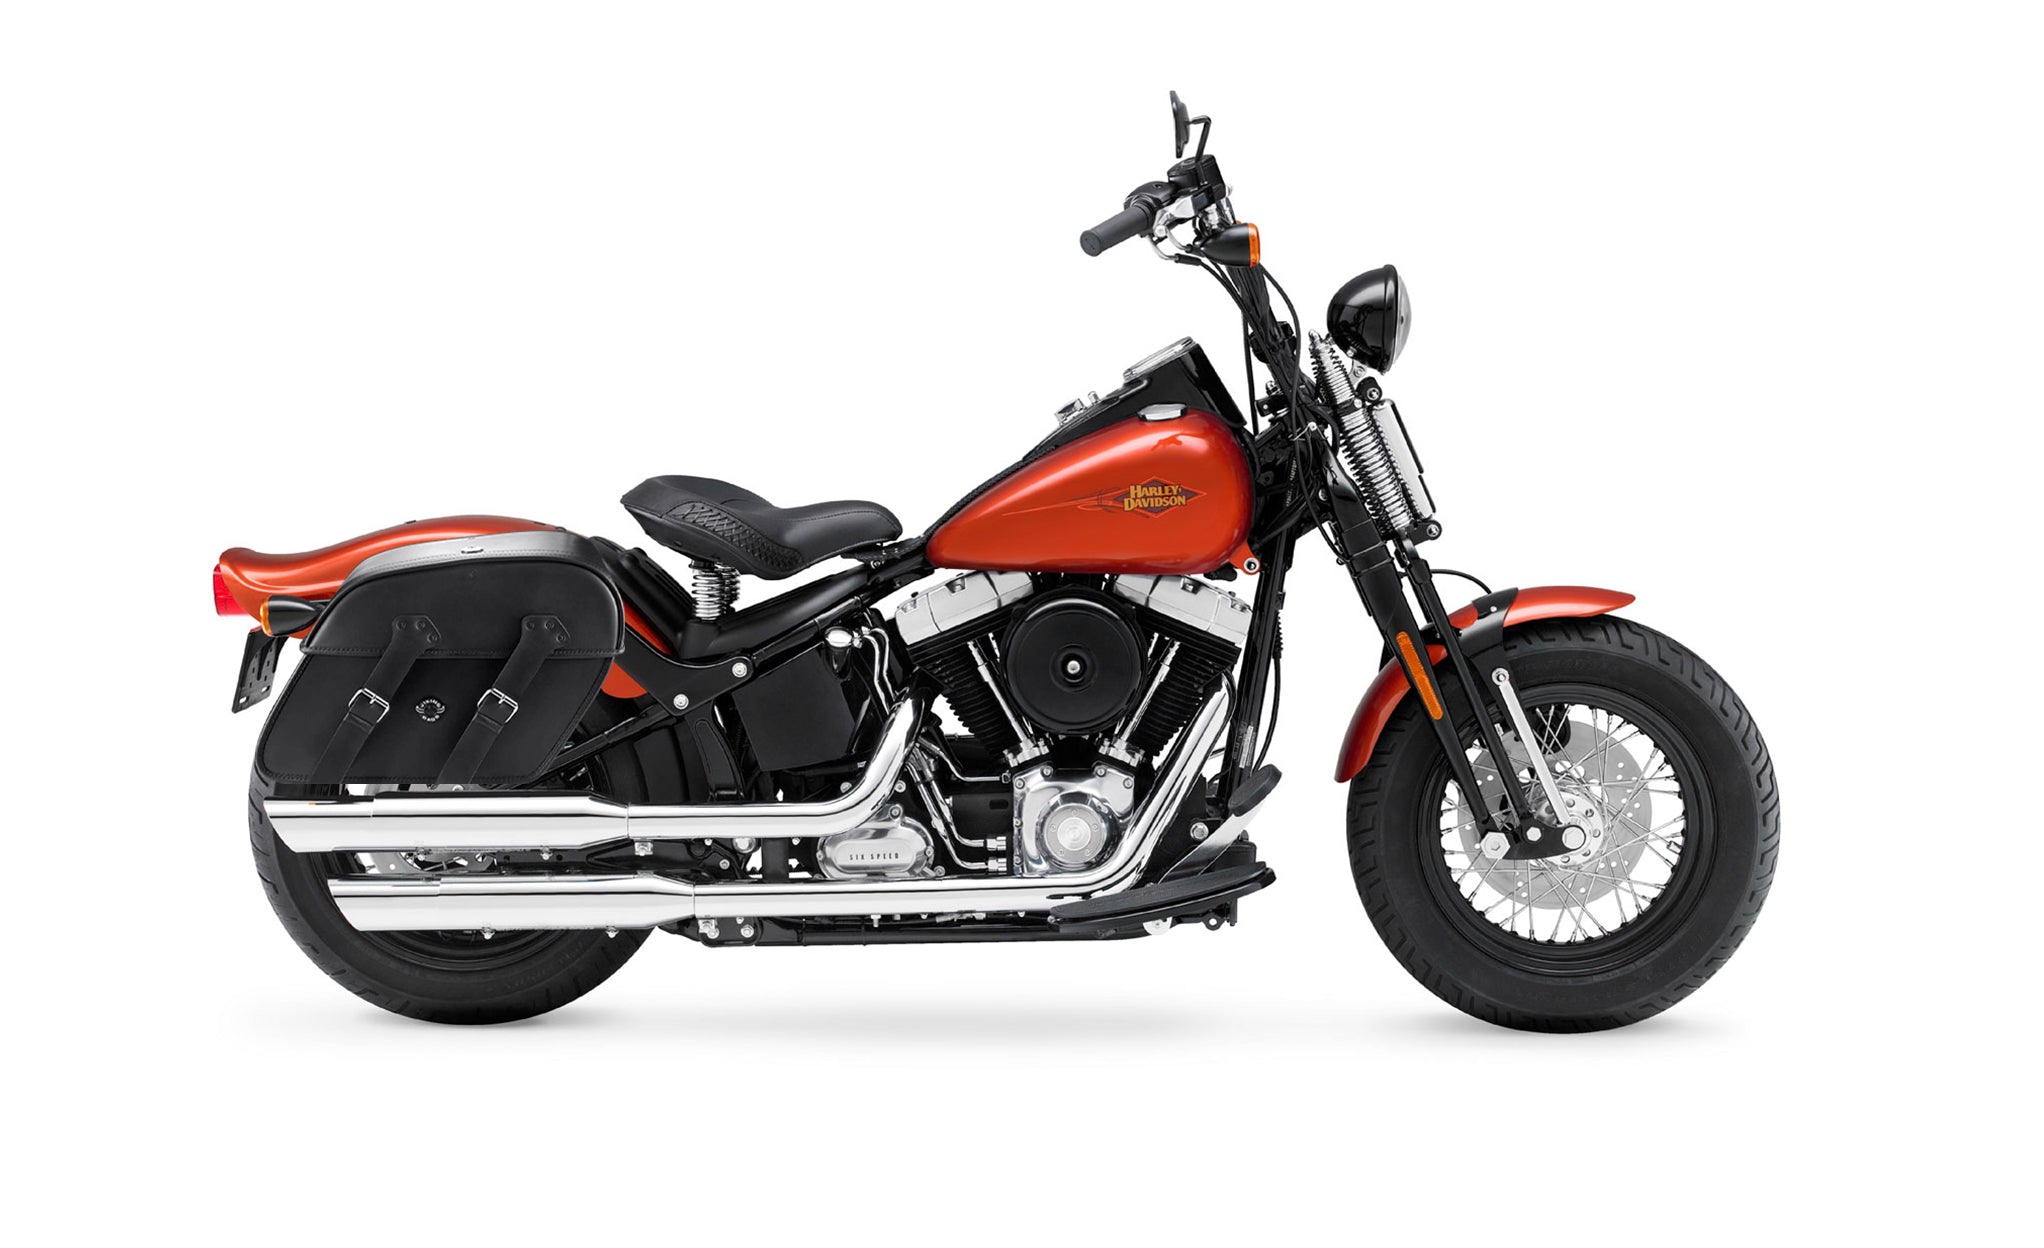 Viking Raven Large Motorcycle Leather Saddlebags For Harley Softail Cross Bones Flstsb on Bike Photo @expand